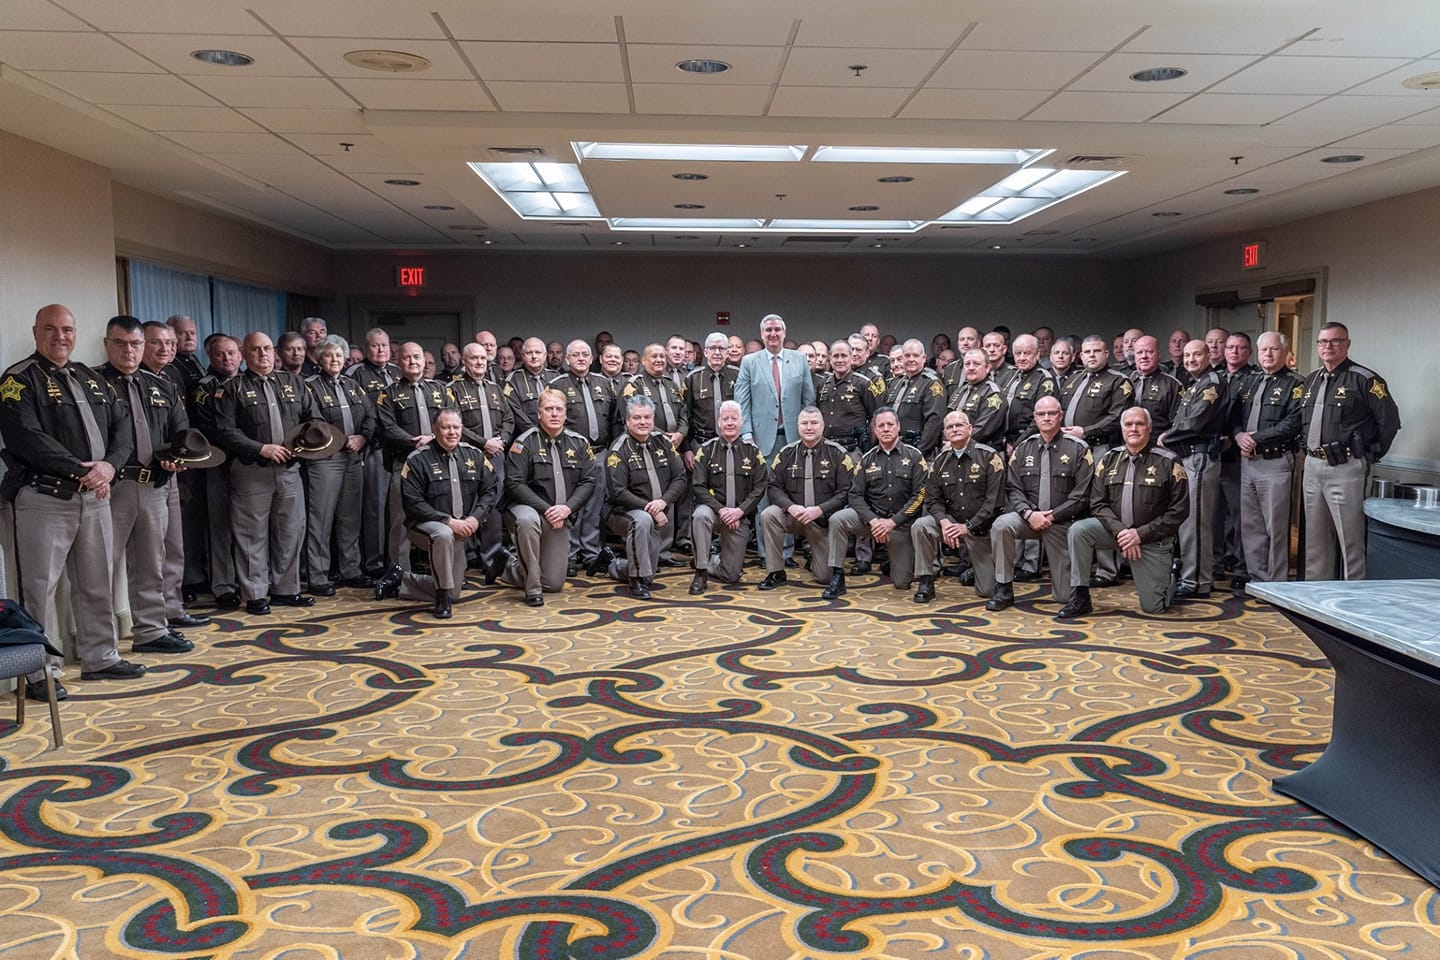 Group photo of sheriffs.